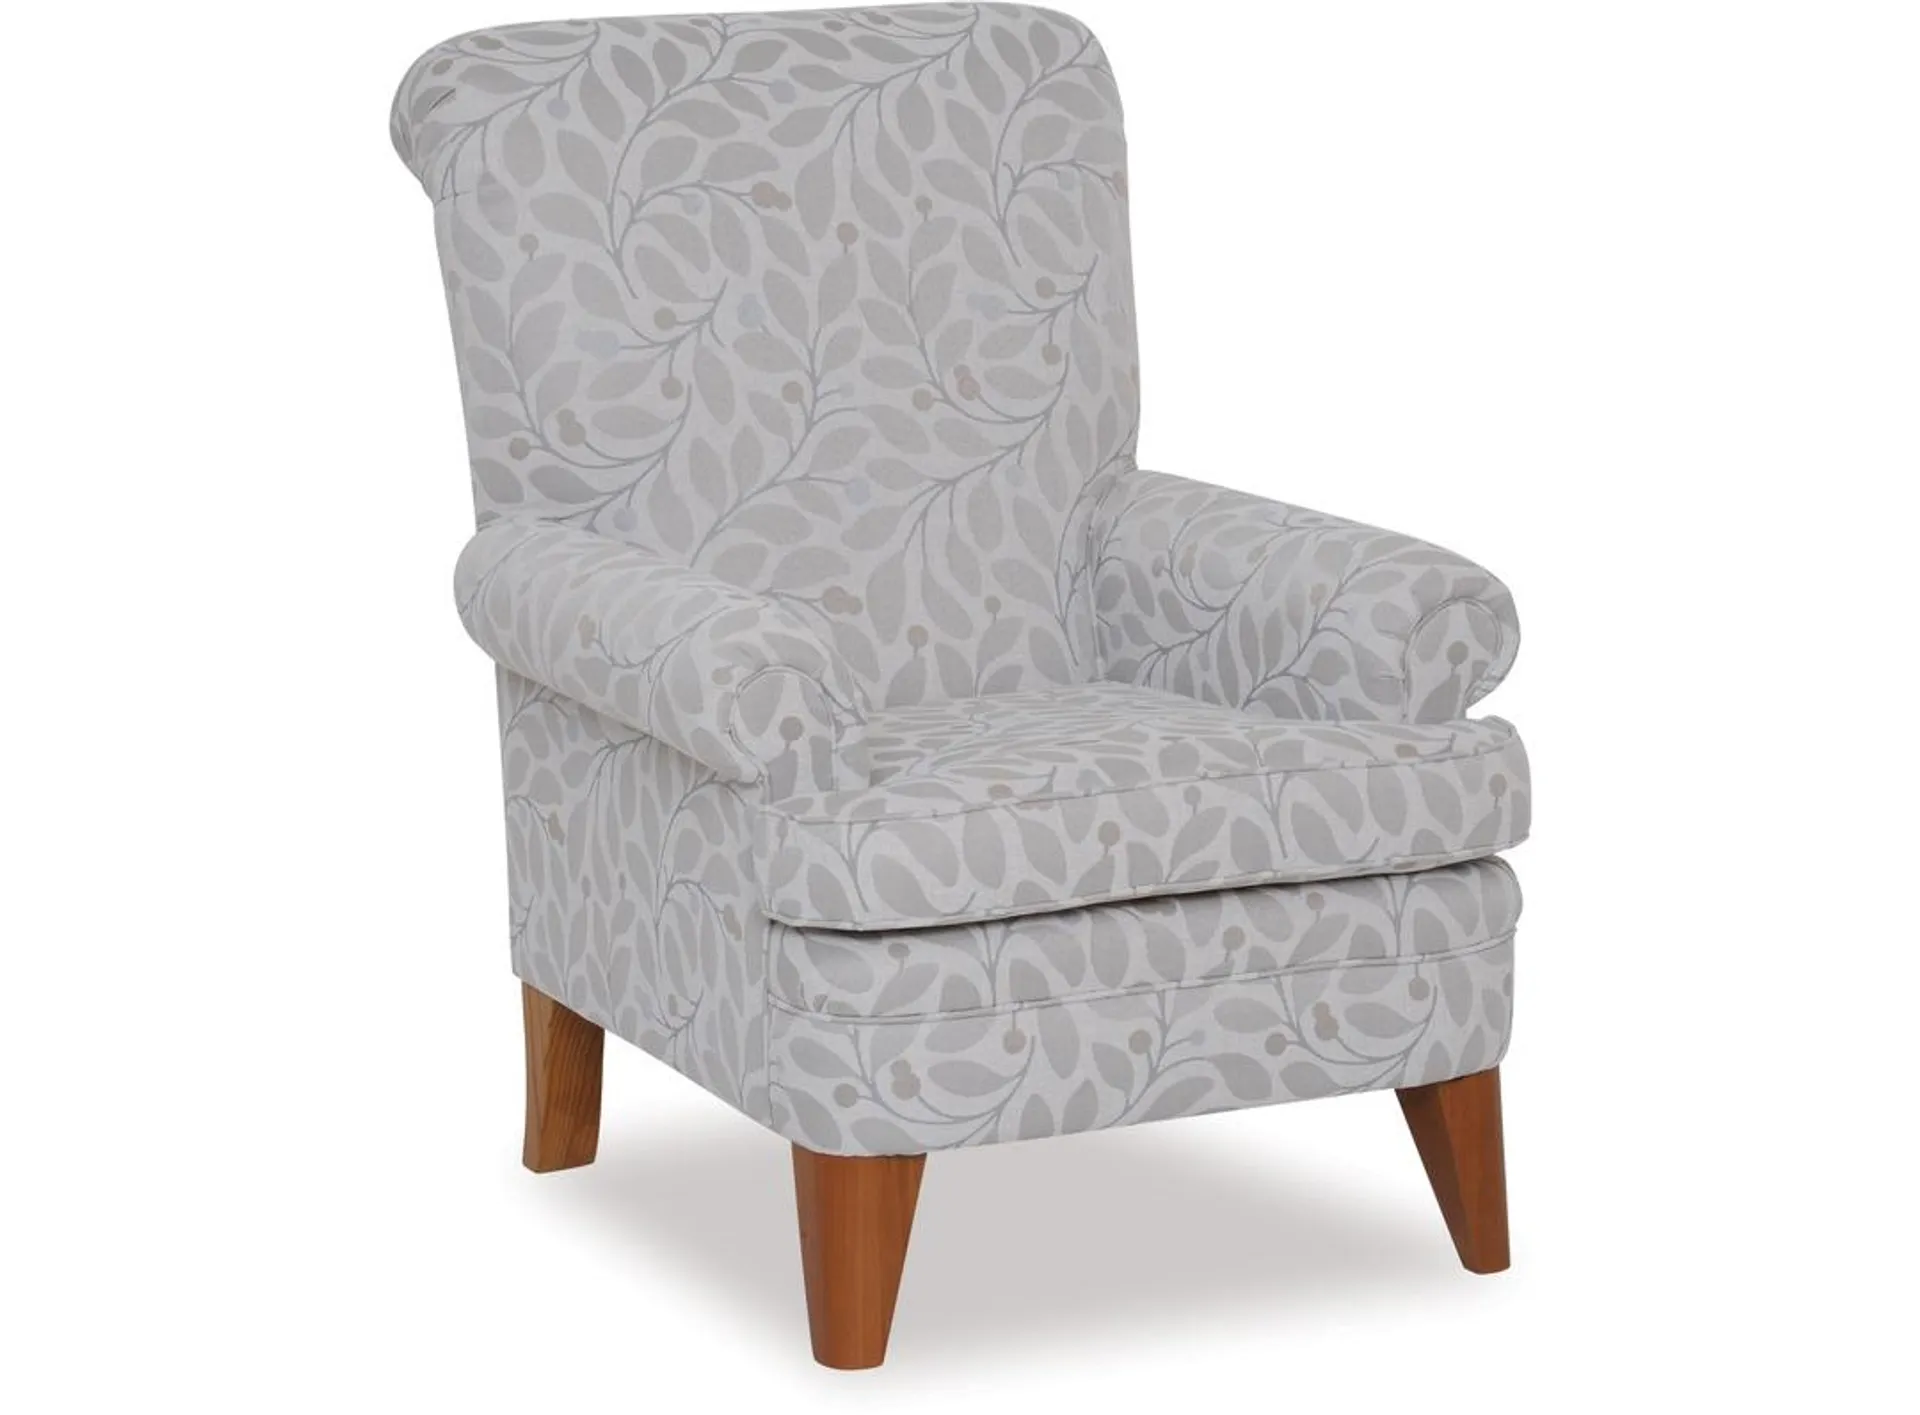 Devonport Armchair / Occasional Chair